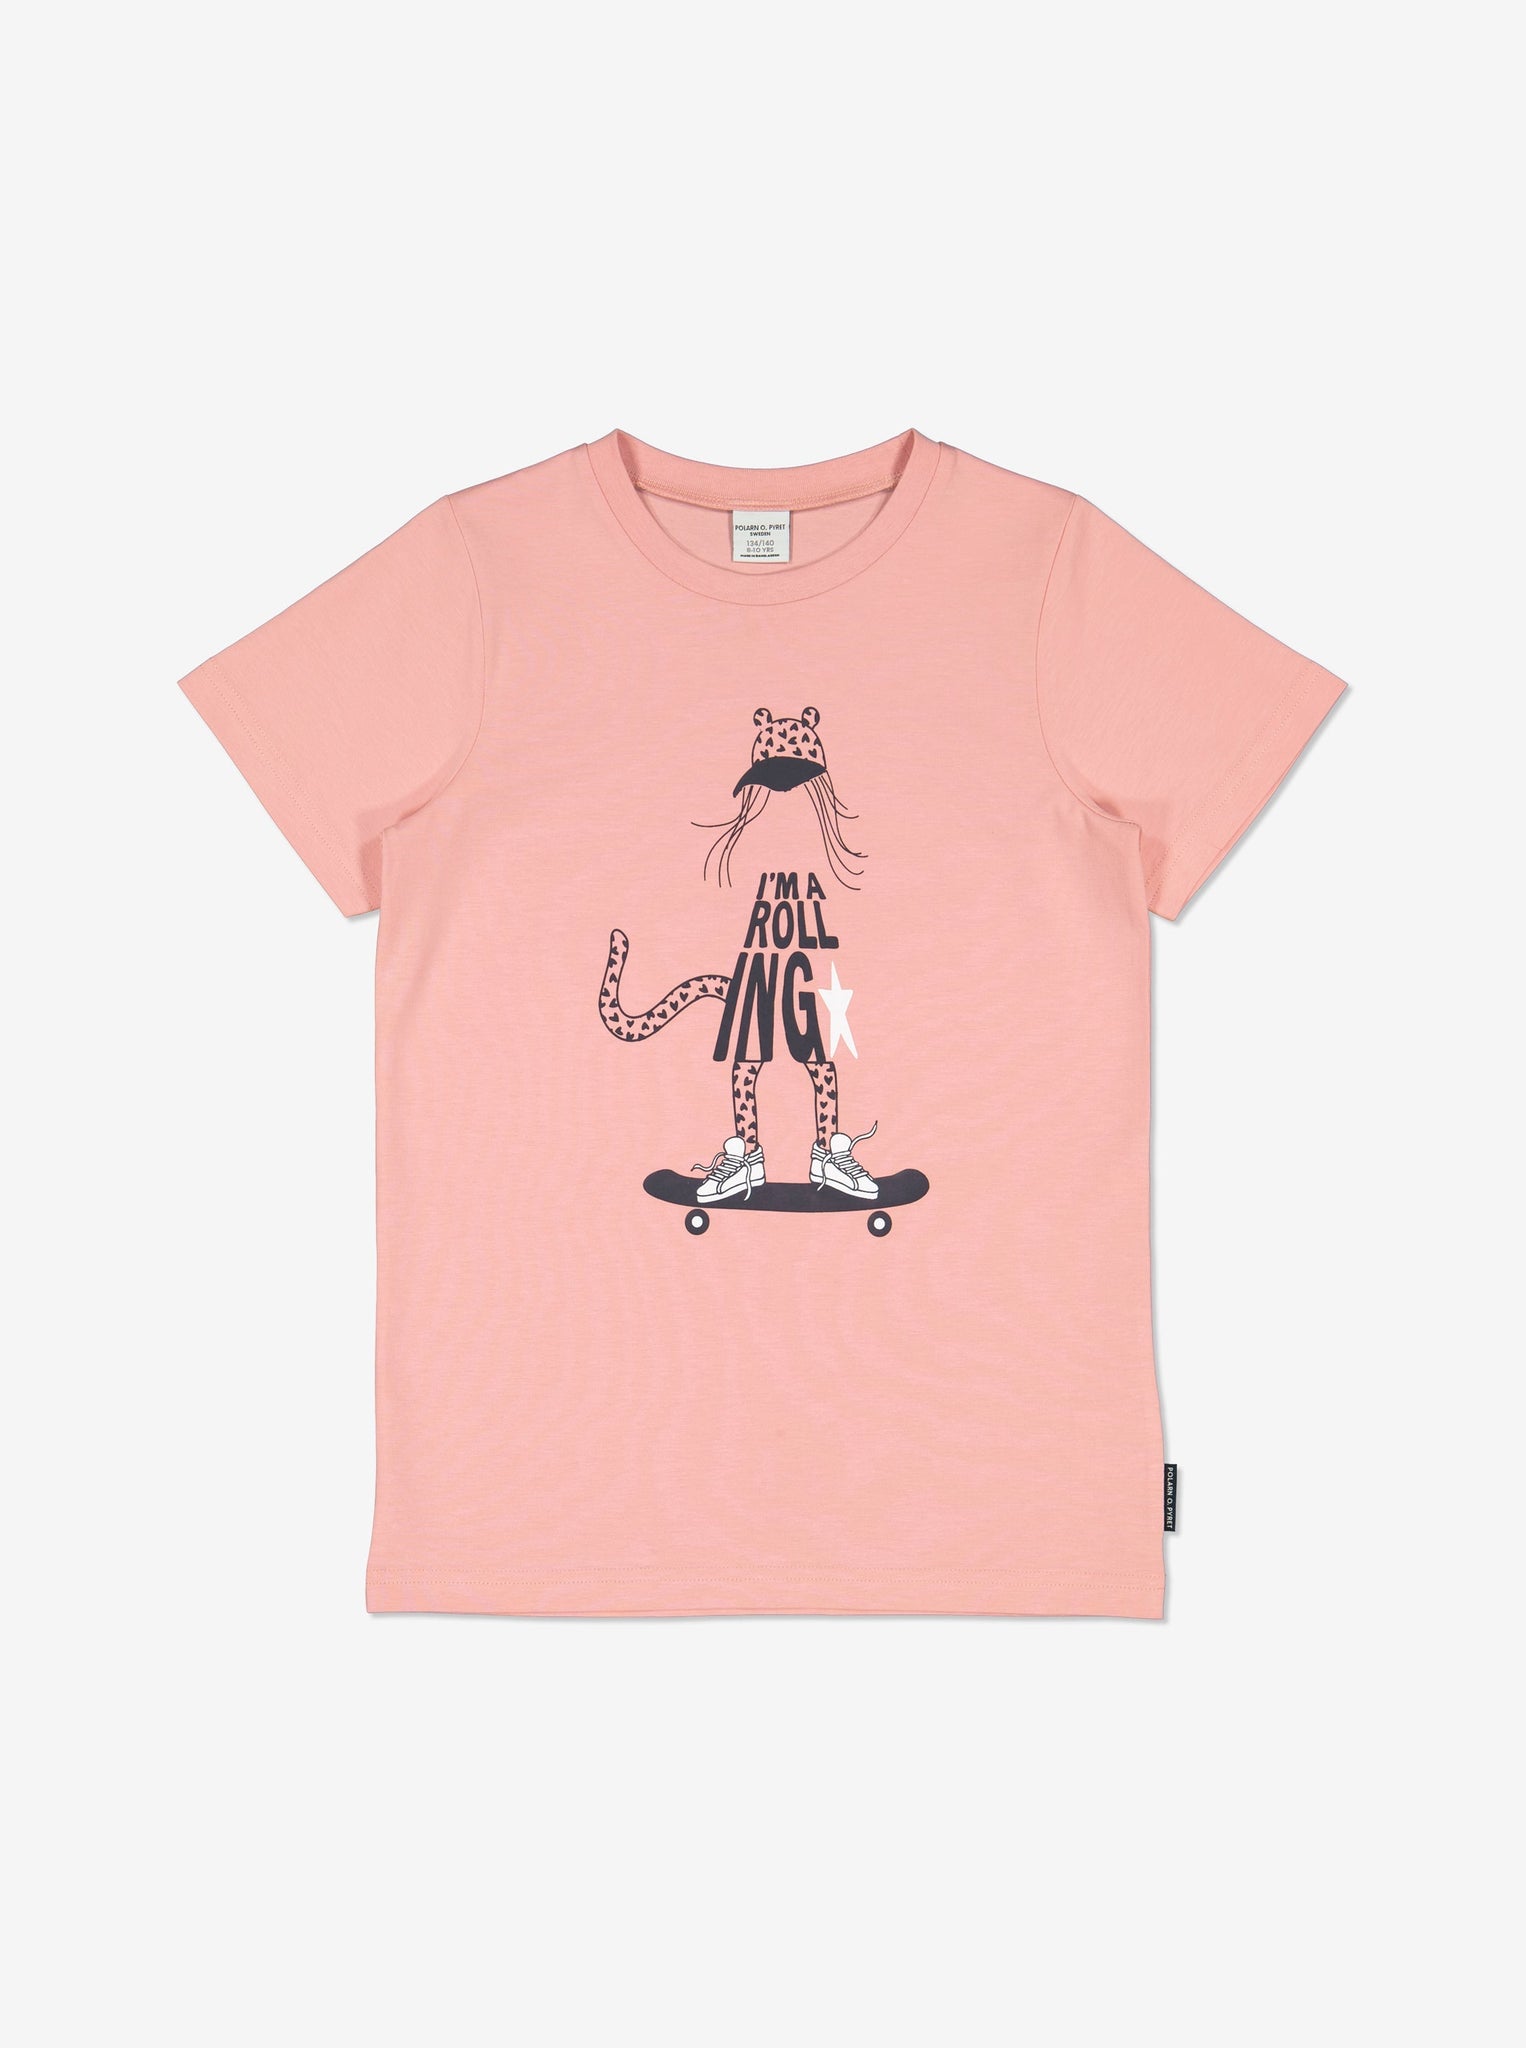  Organic Cotton Pink Kids T-Shirt from Polarn O. Pyret Kidswear. Made using environmentally friendly materials.